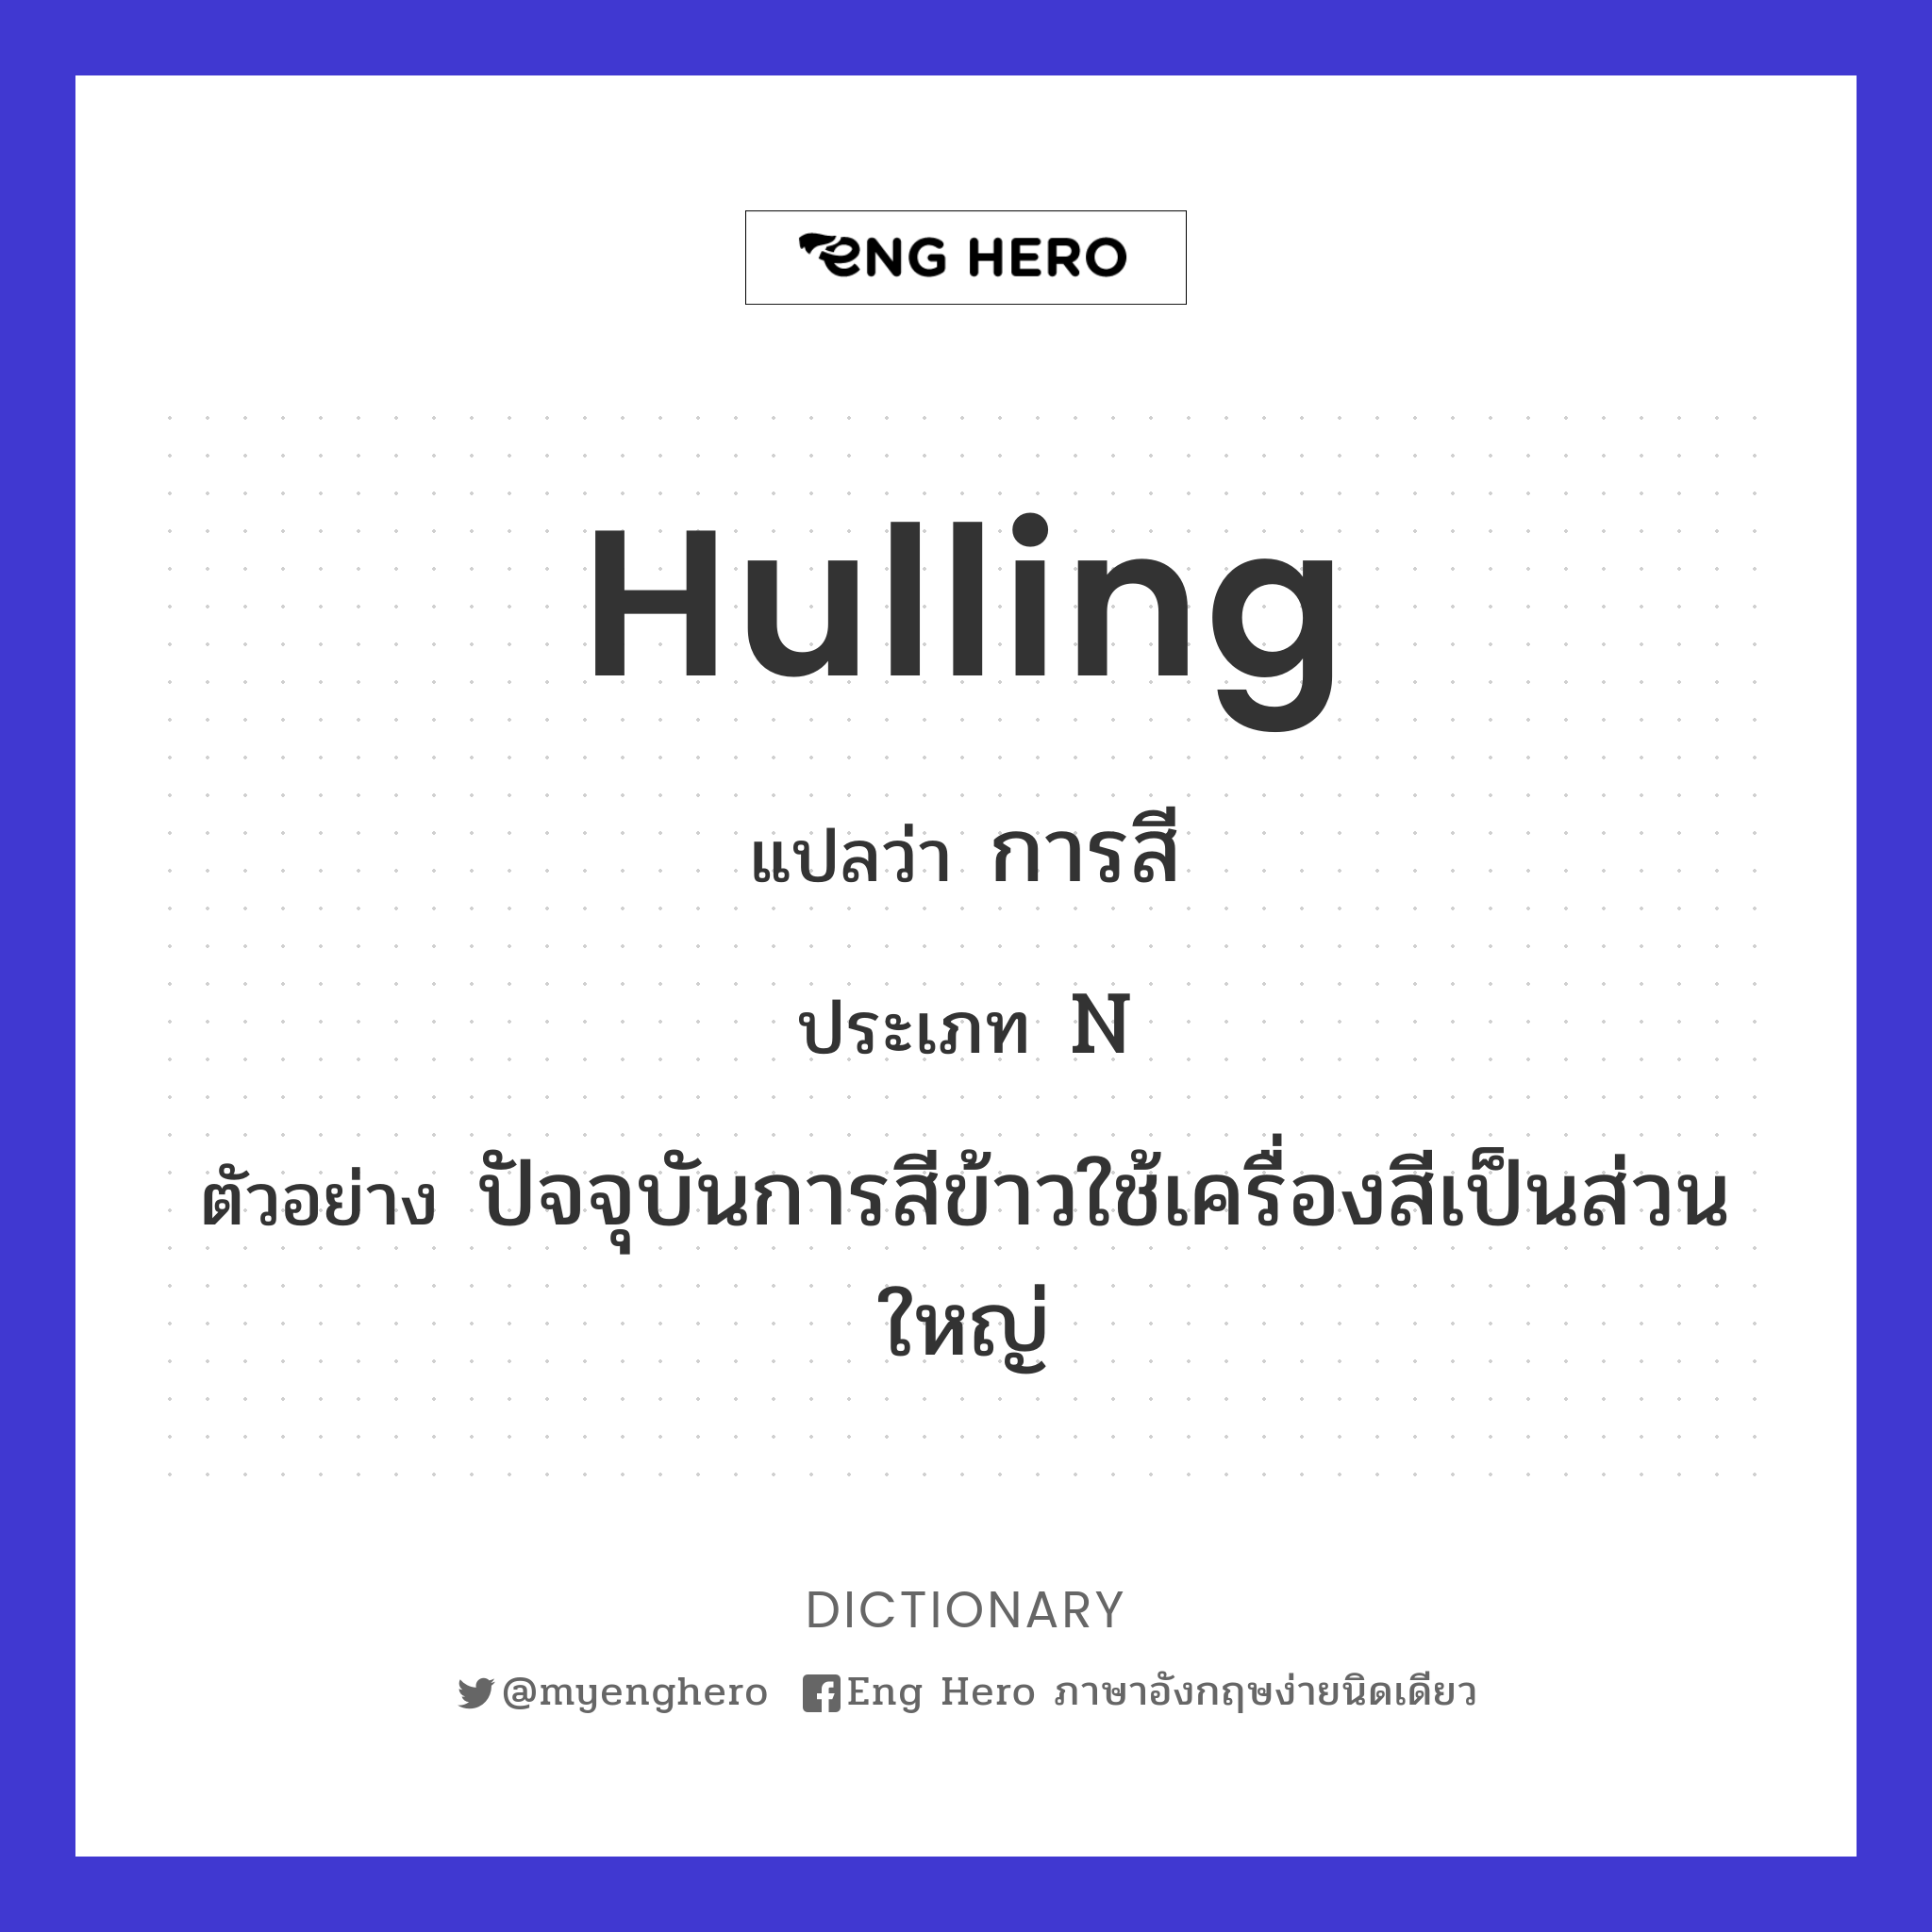 hulling